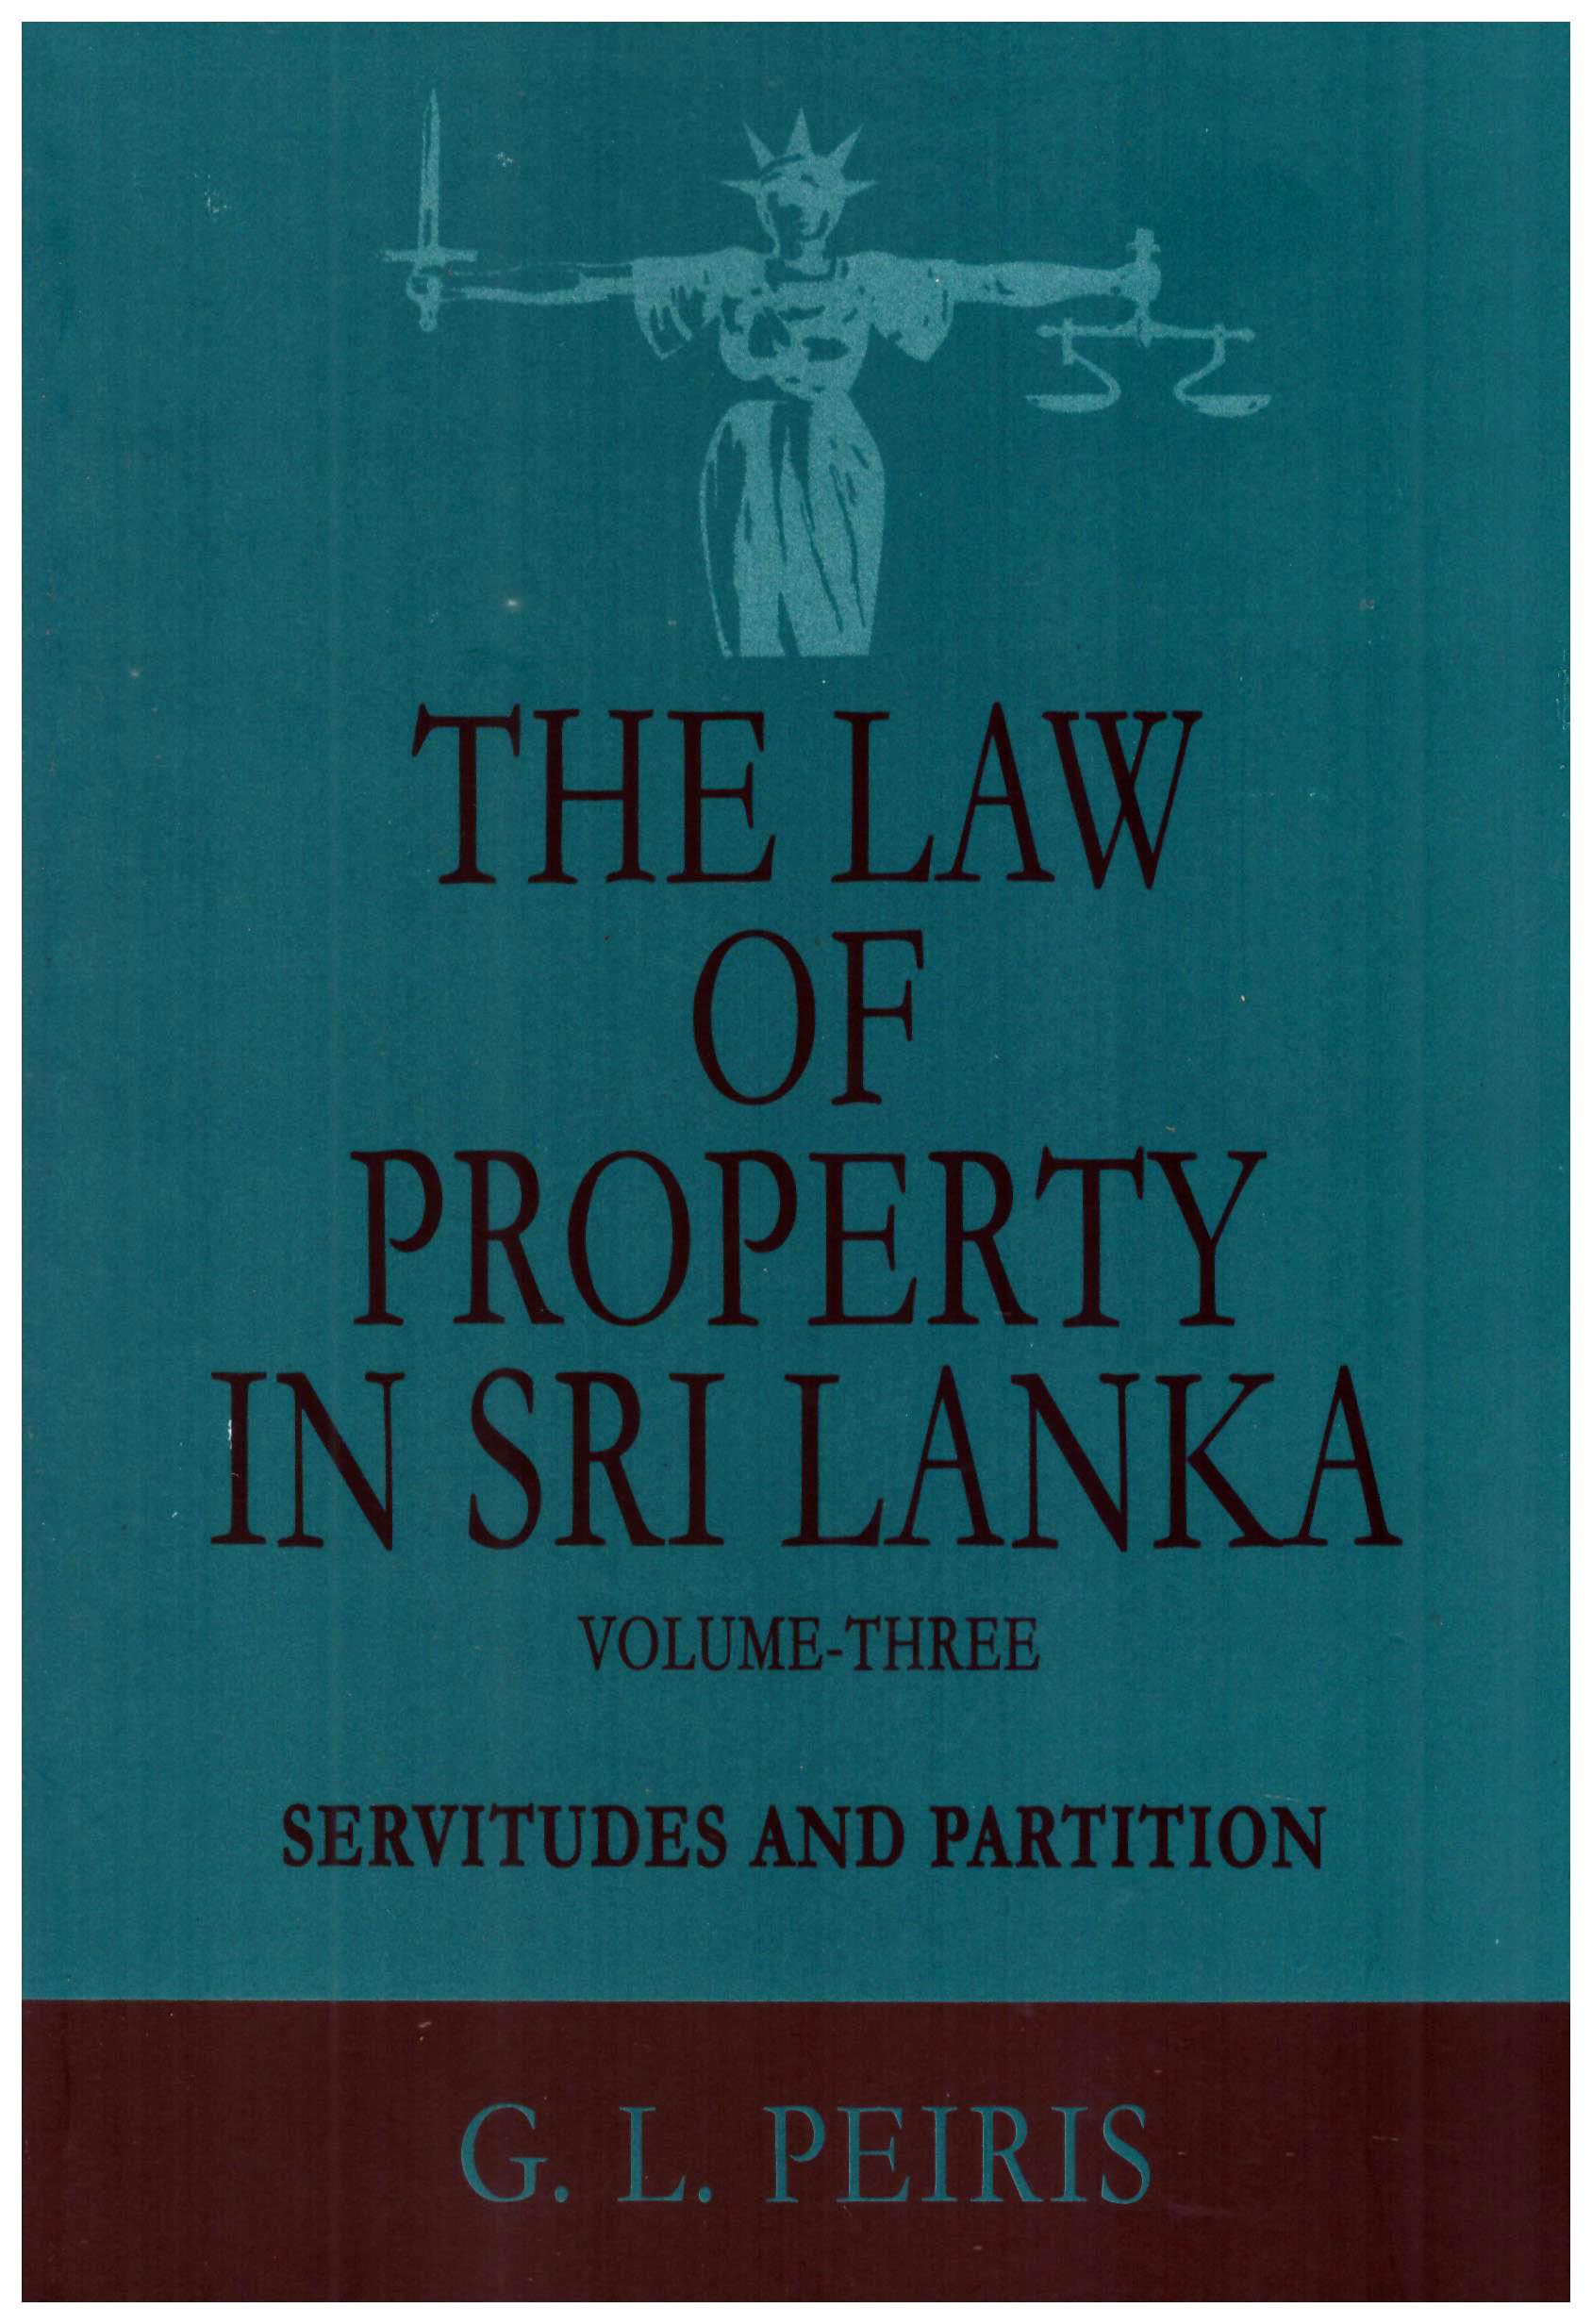 The Law of Property in Sri Lanka Vol. III